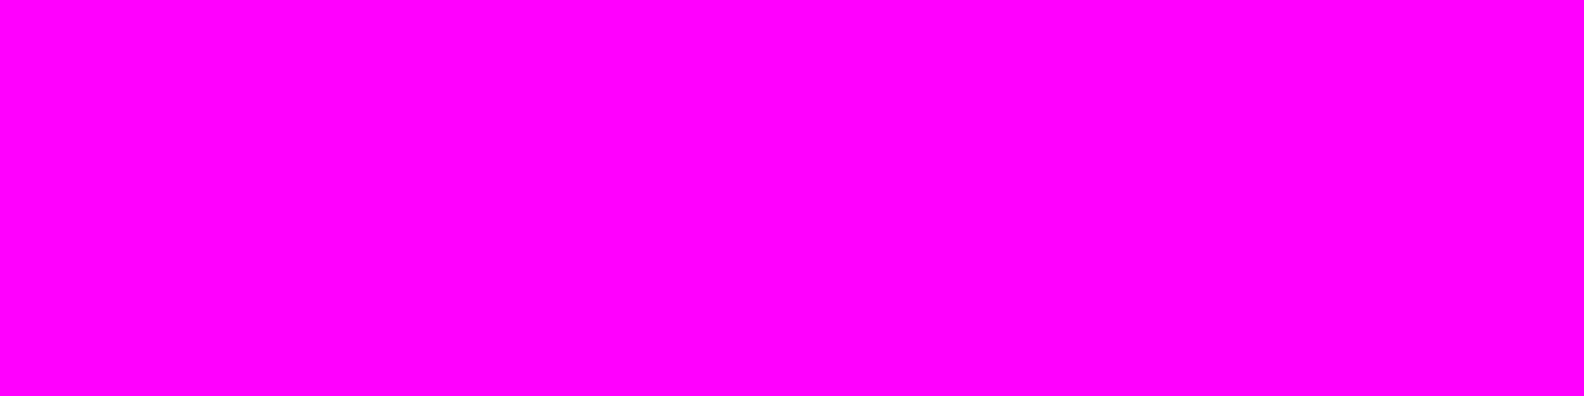 1584x396 Magenta Solid Color Background